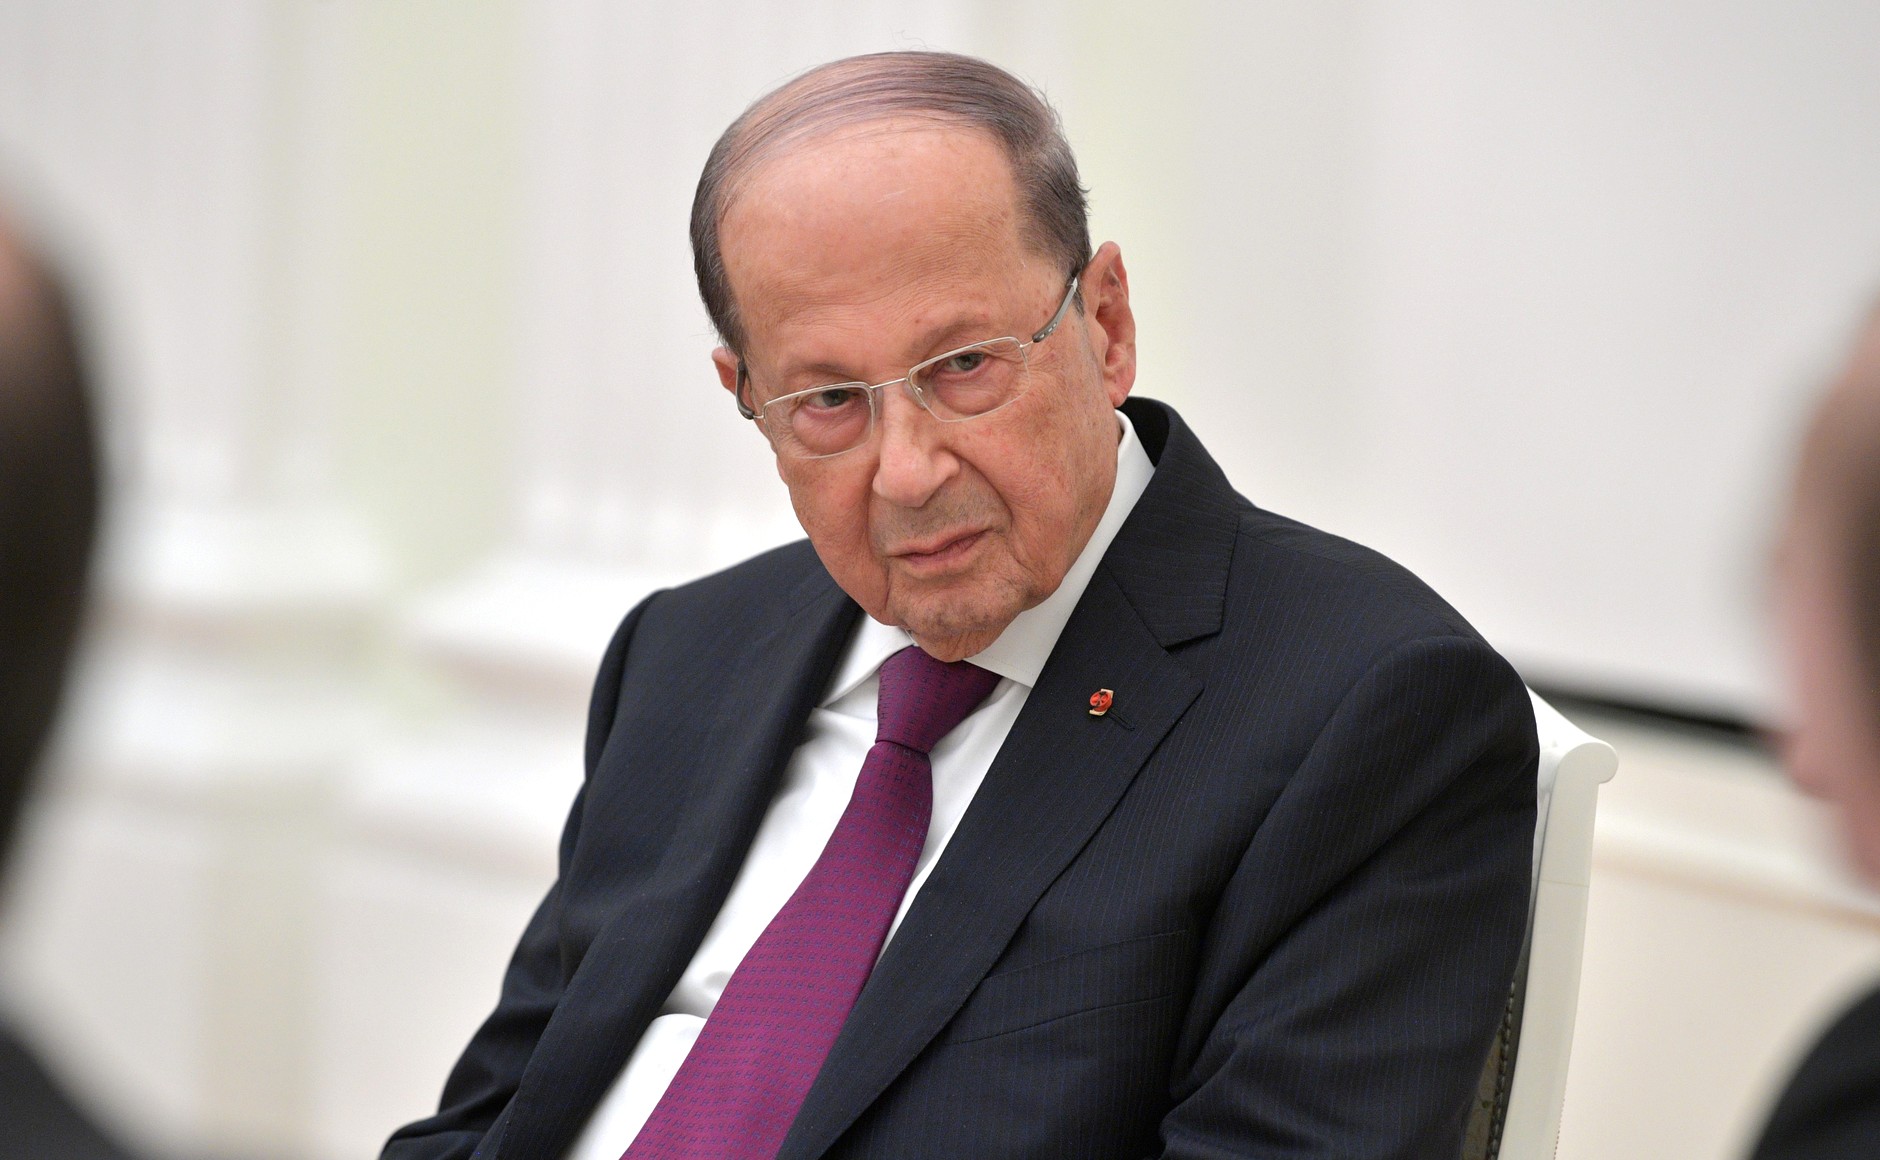 President of Lebanon Michel Aoun